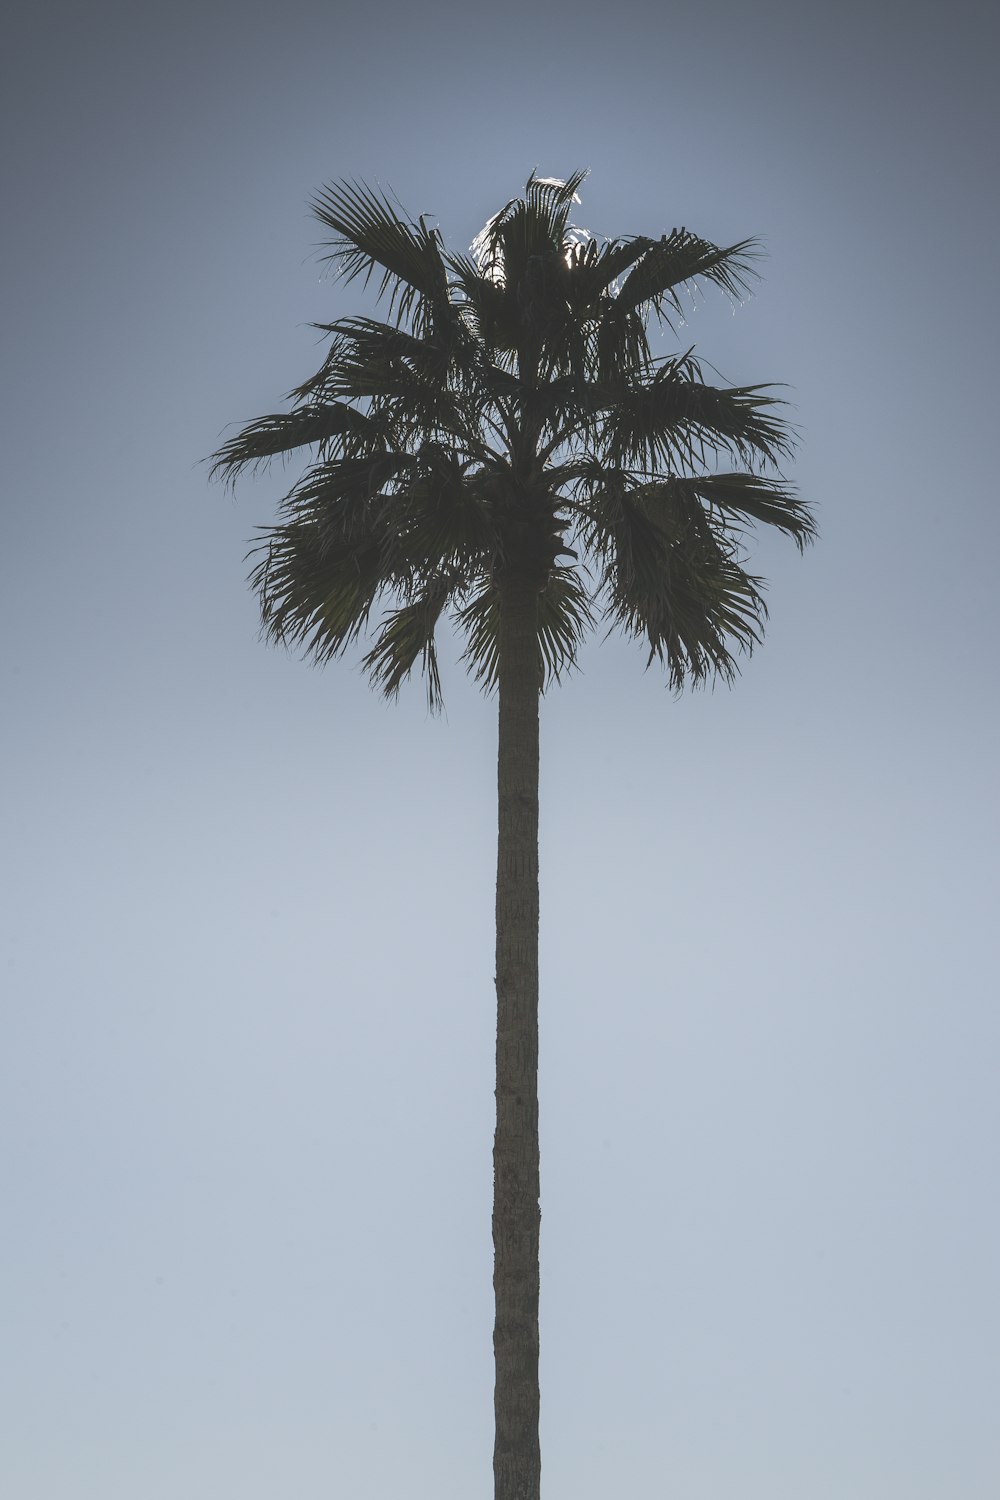 un'alta palma seduta sotto un cielo blu